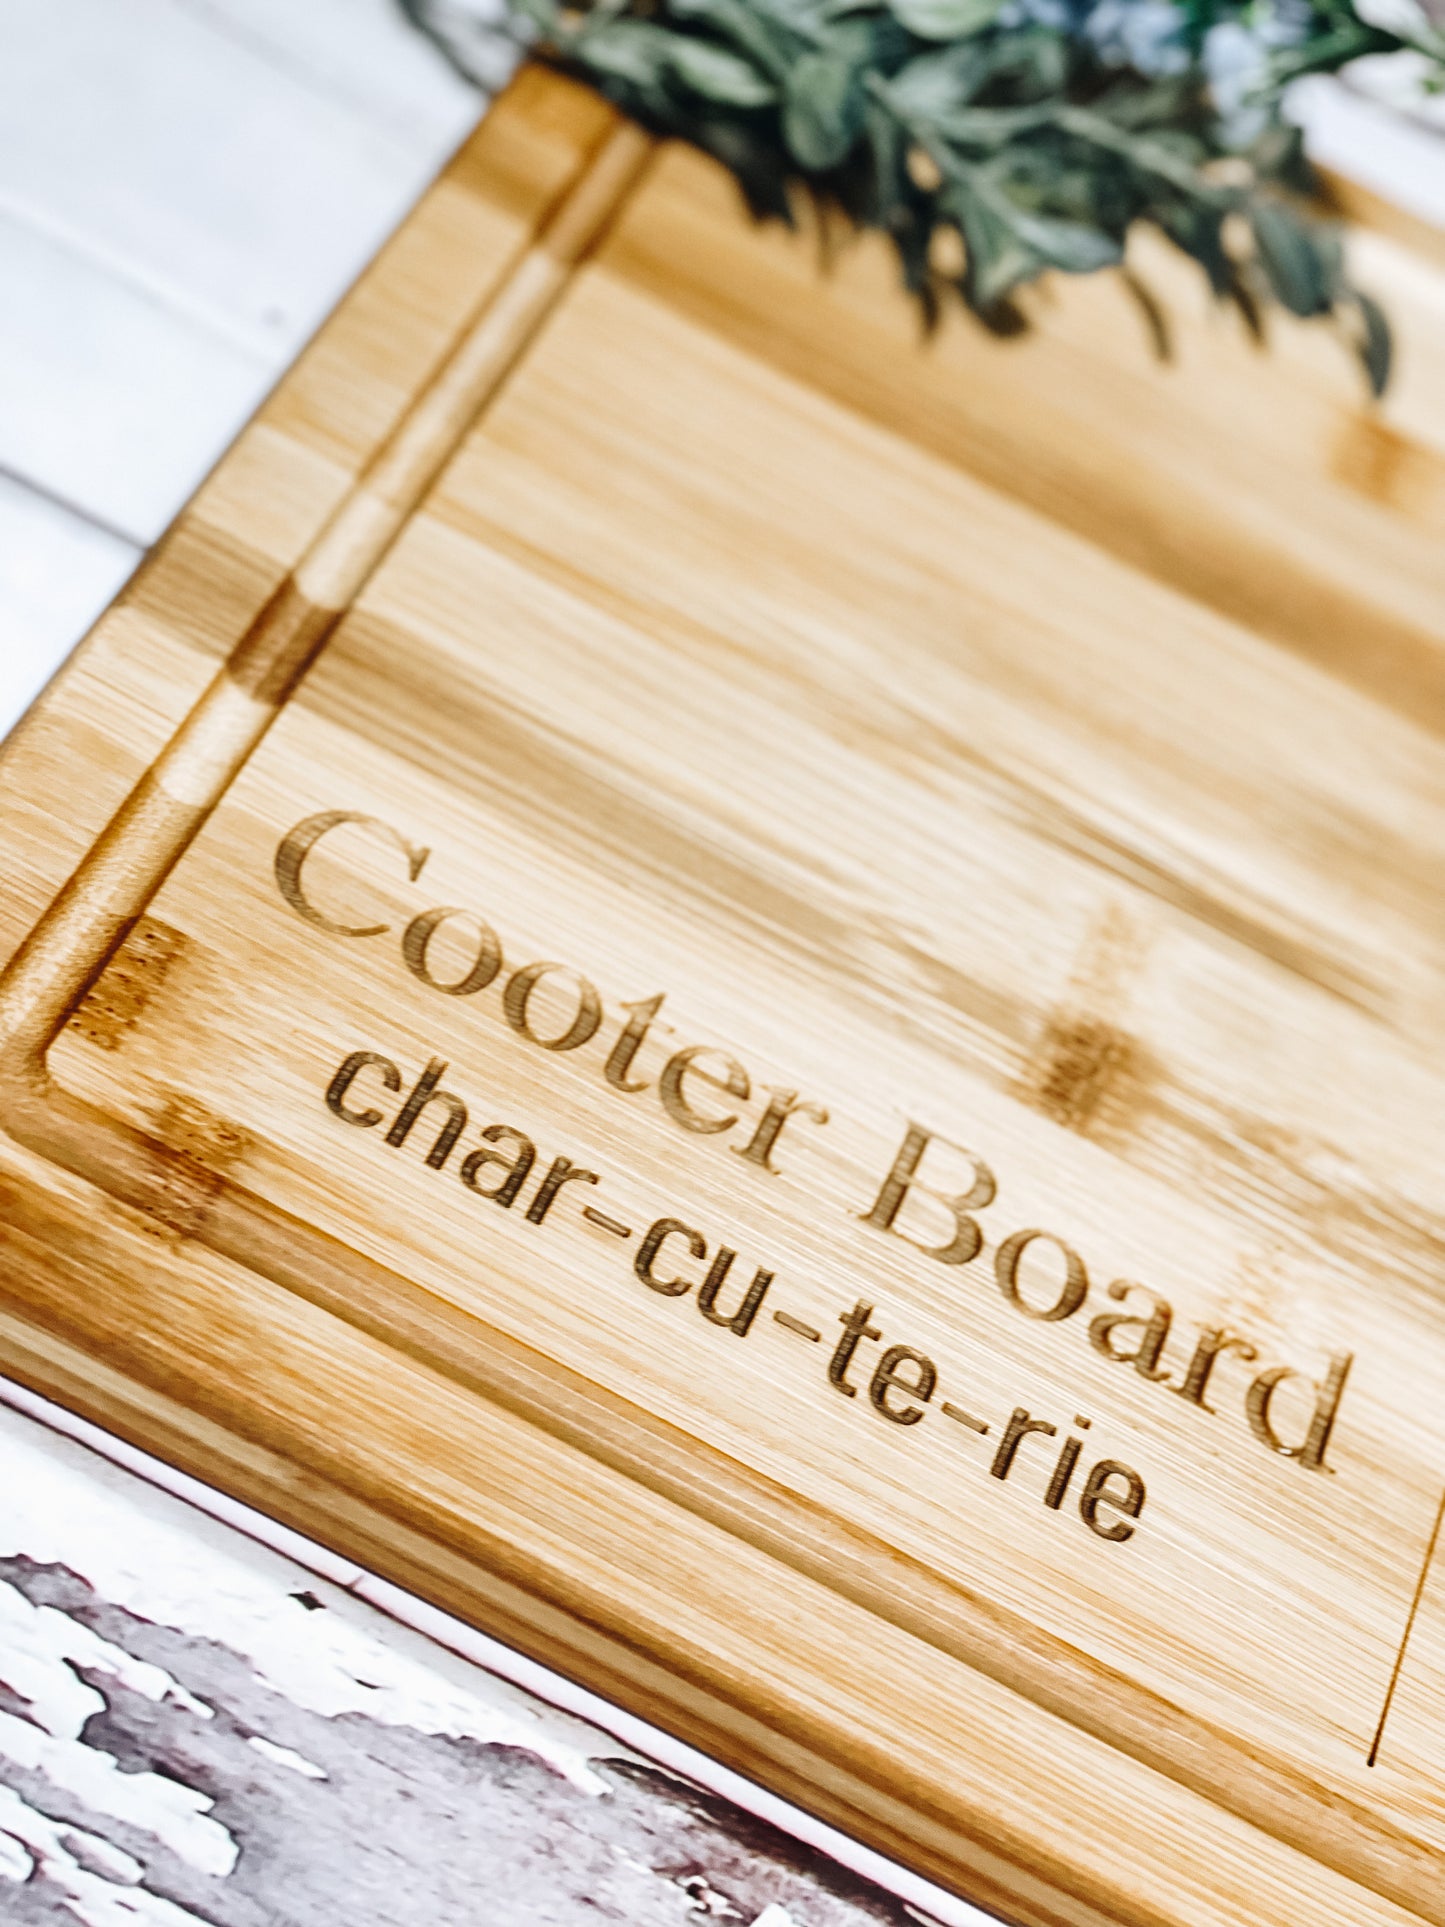 Cooter Board Serving Board • Charcuterie Board